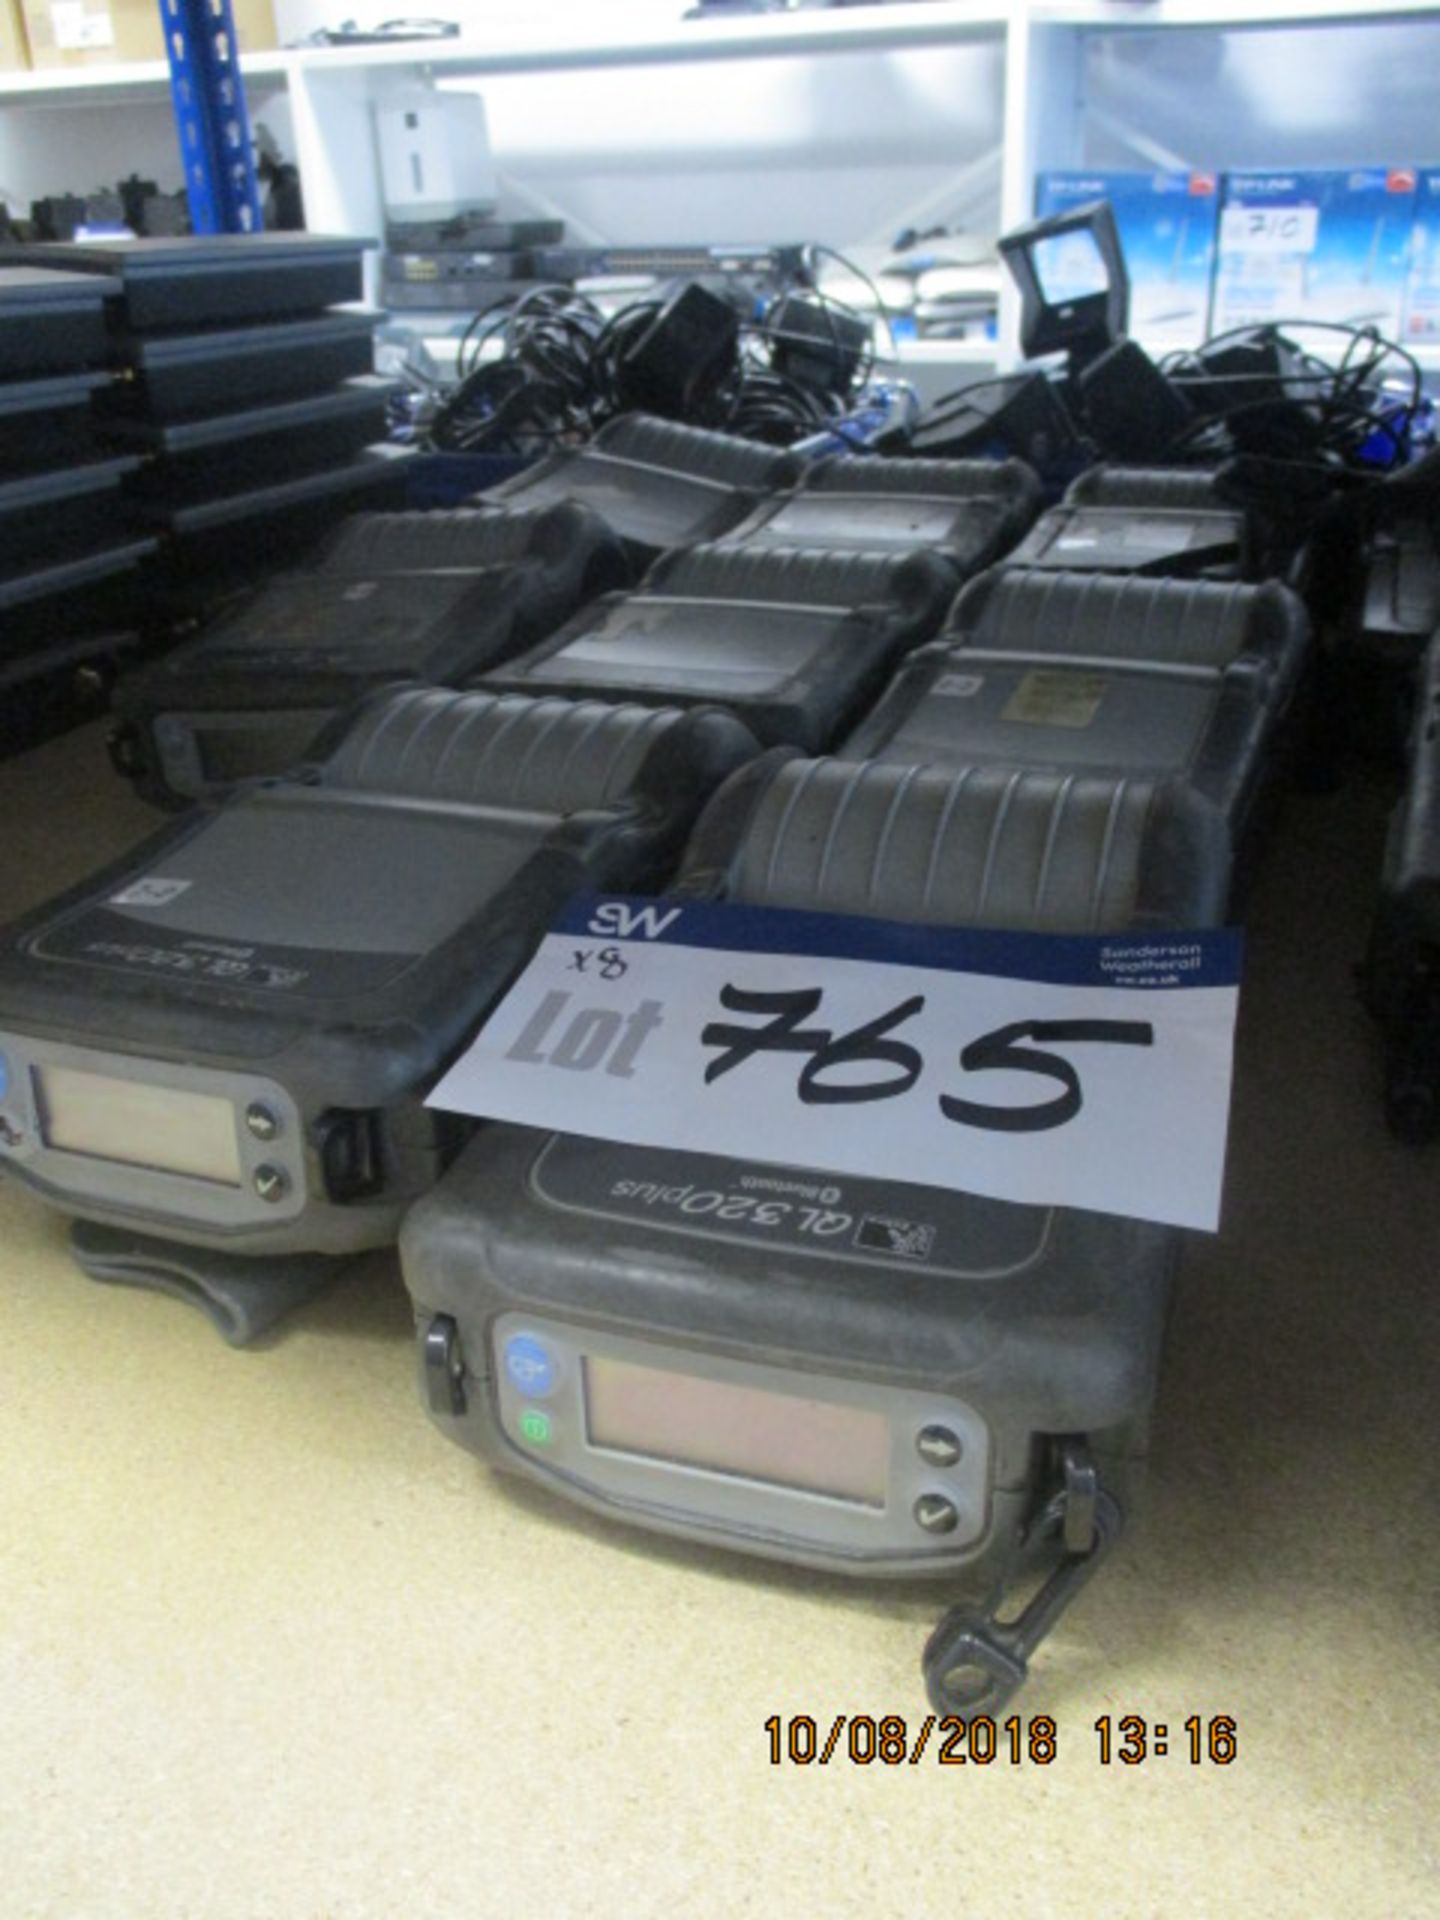 8 x Zebra QL320+ Label Printers